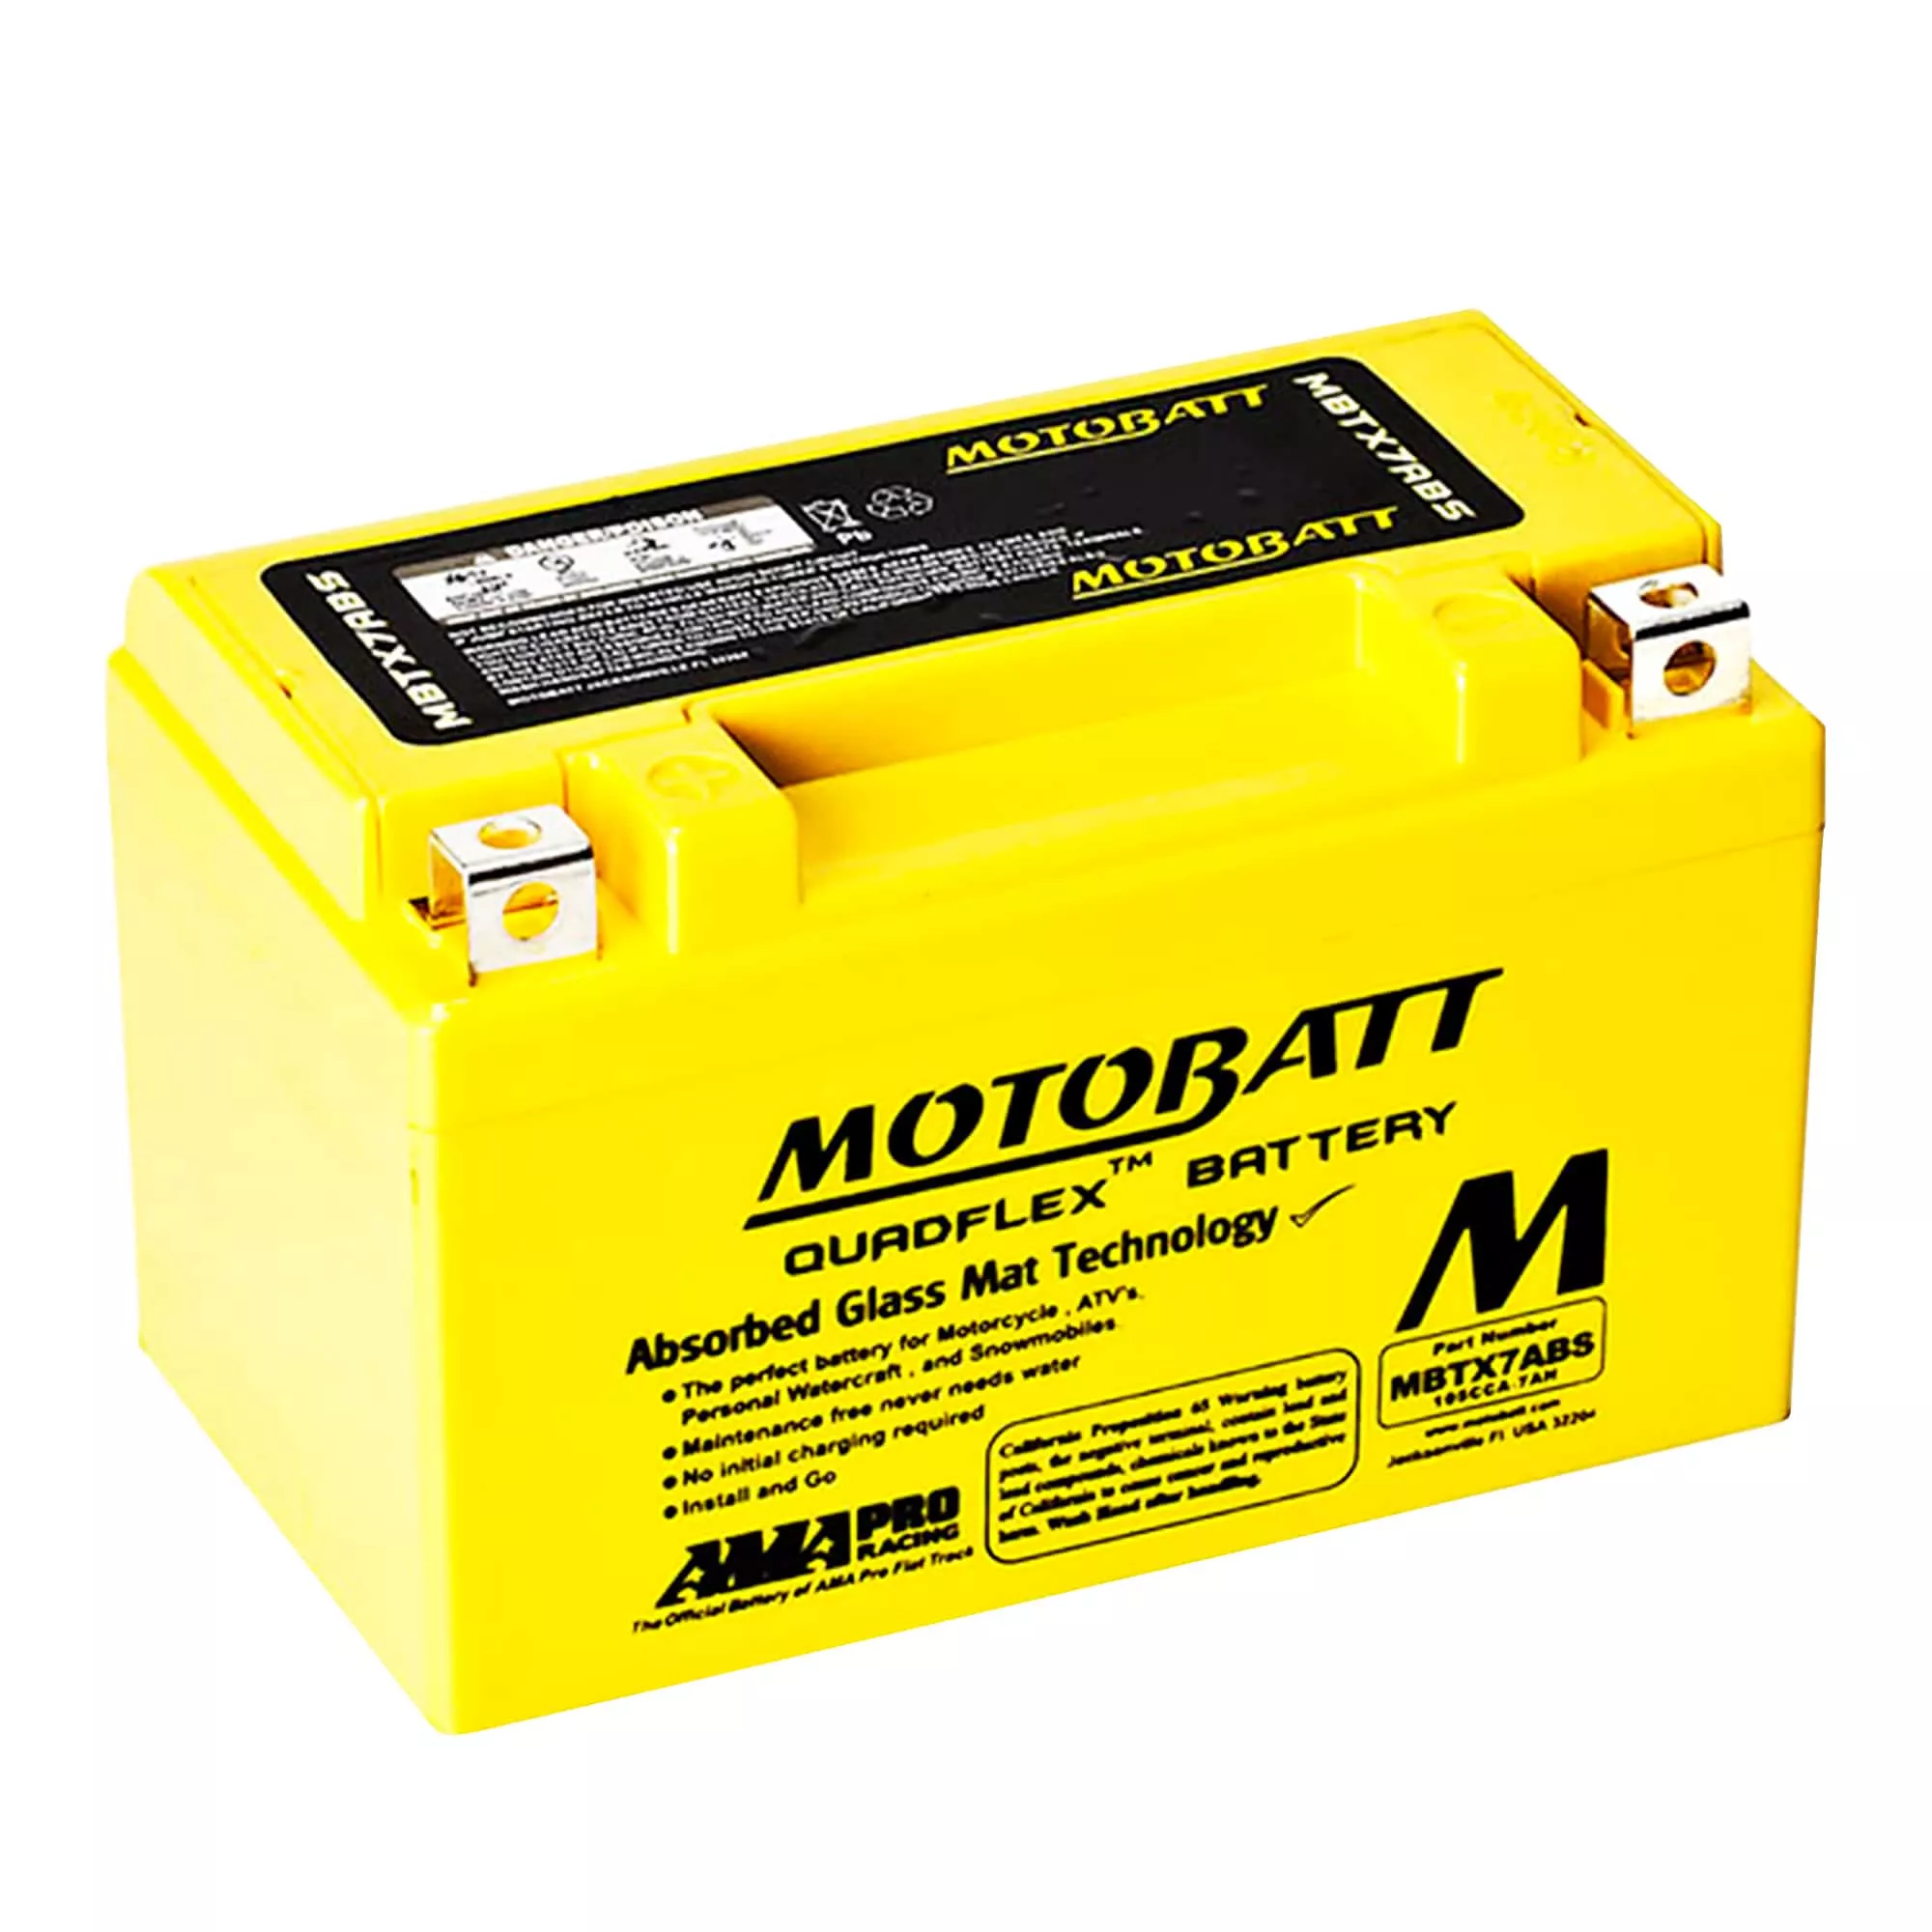 Мото аккумулятор MOTOBATT залитый и заряженный AGM 7Ah 105A Аз (MBTX7ABS)